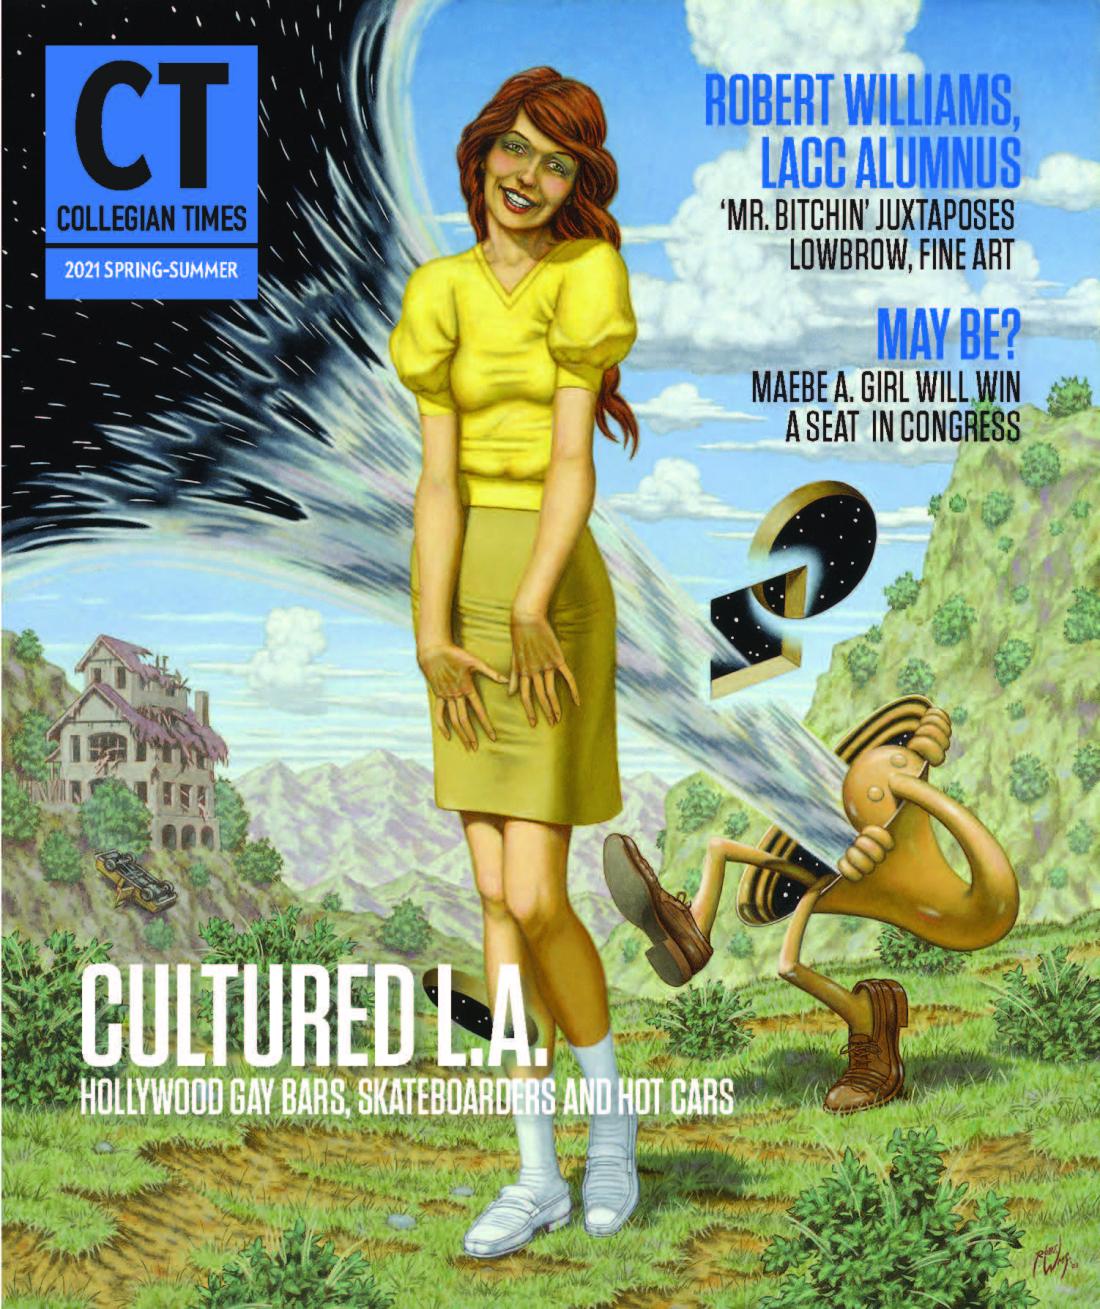 Magazine cover of "Cultured L.A."